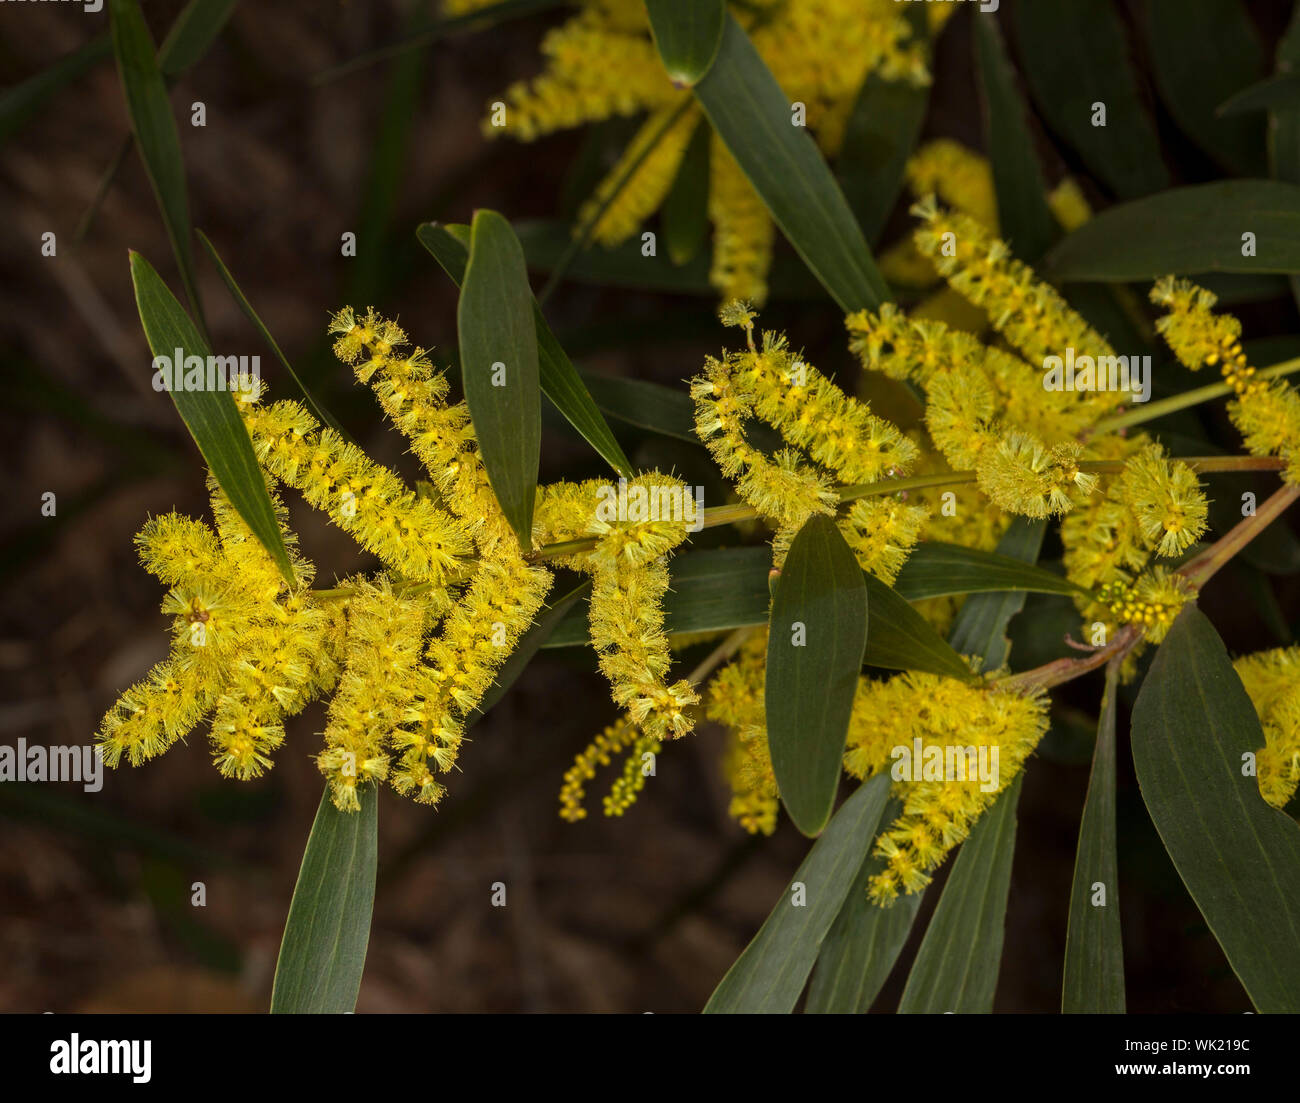 Golden yellow flowers & green leaves of Acacia / wattle, Australian wildflowers on dark background in NSW Stock Photo